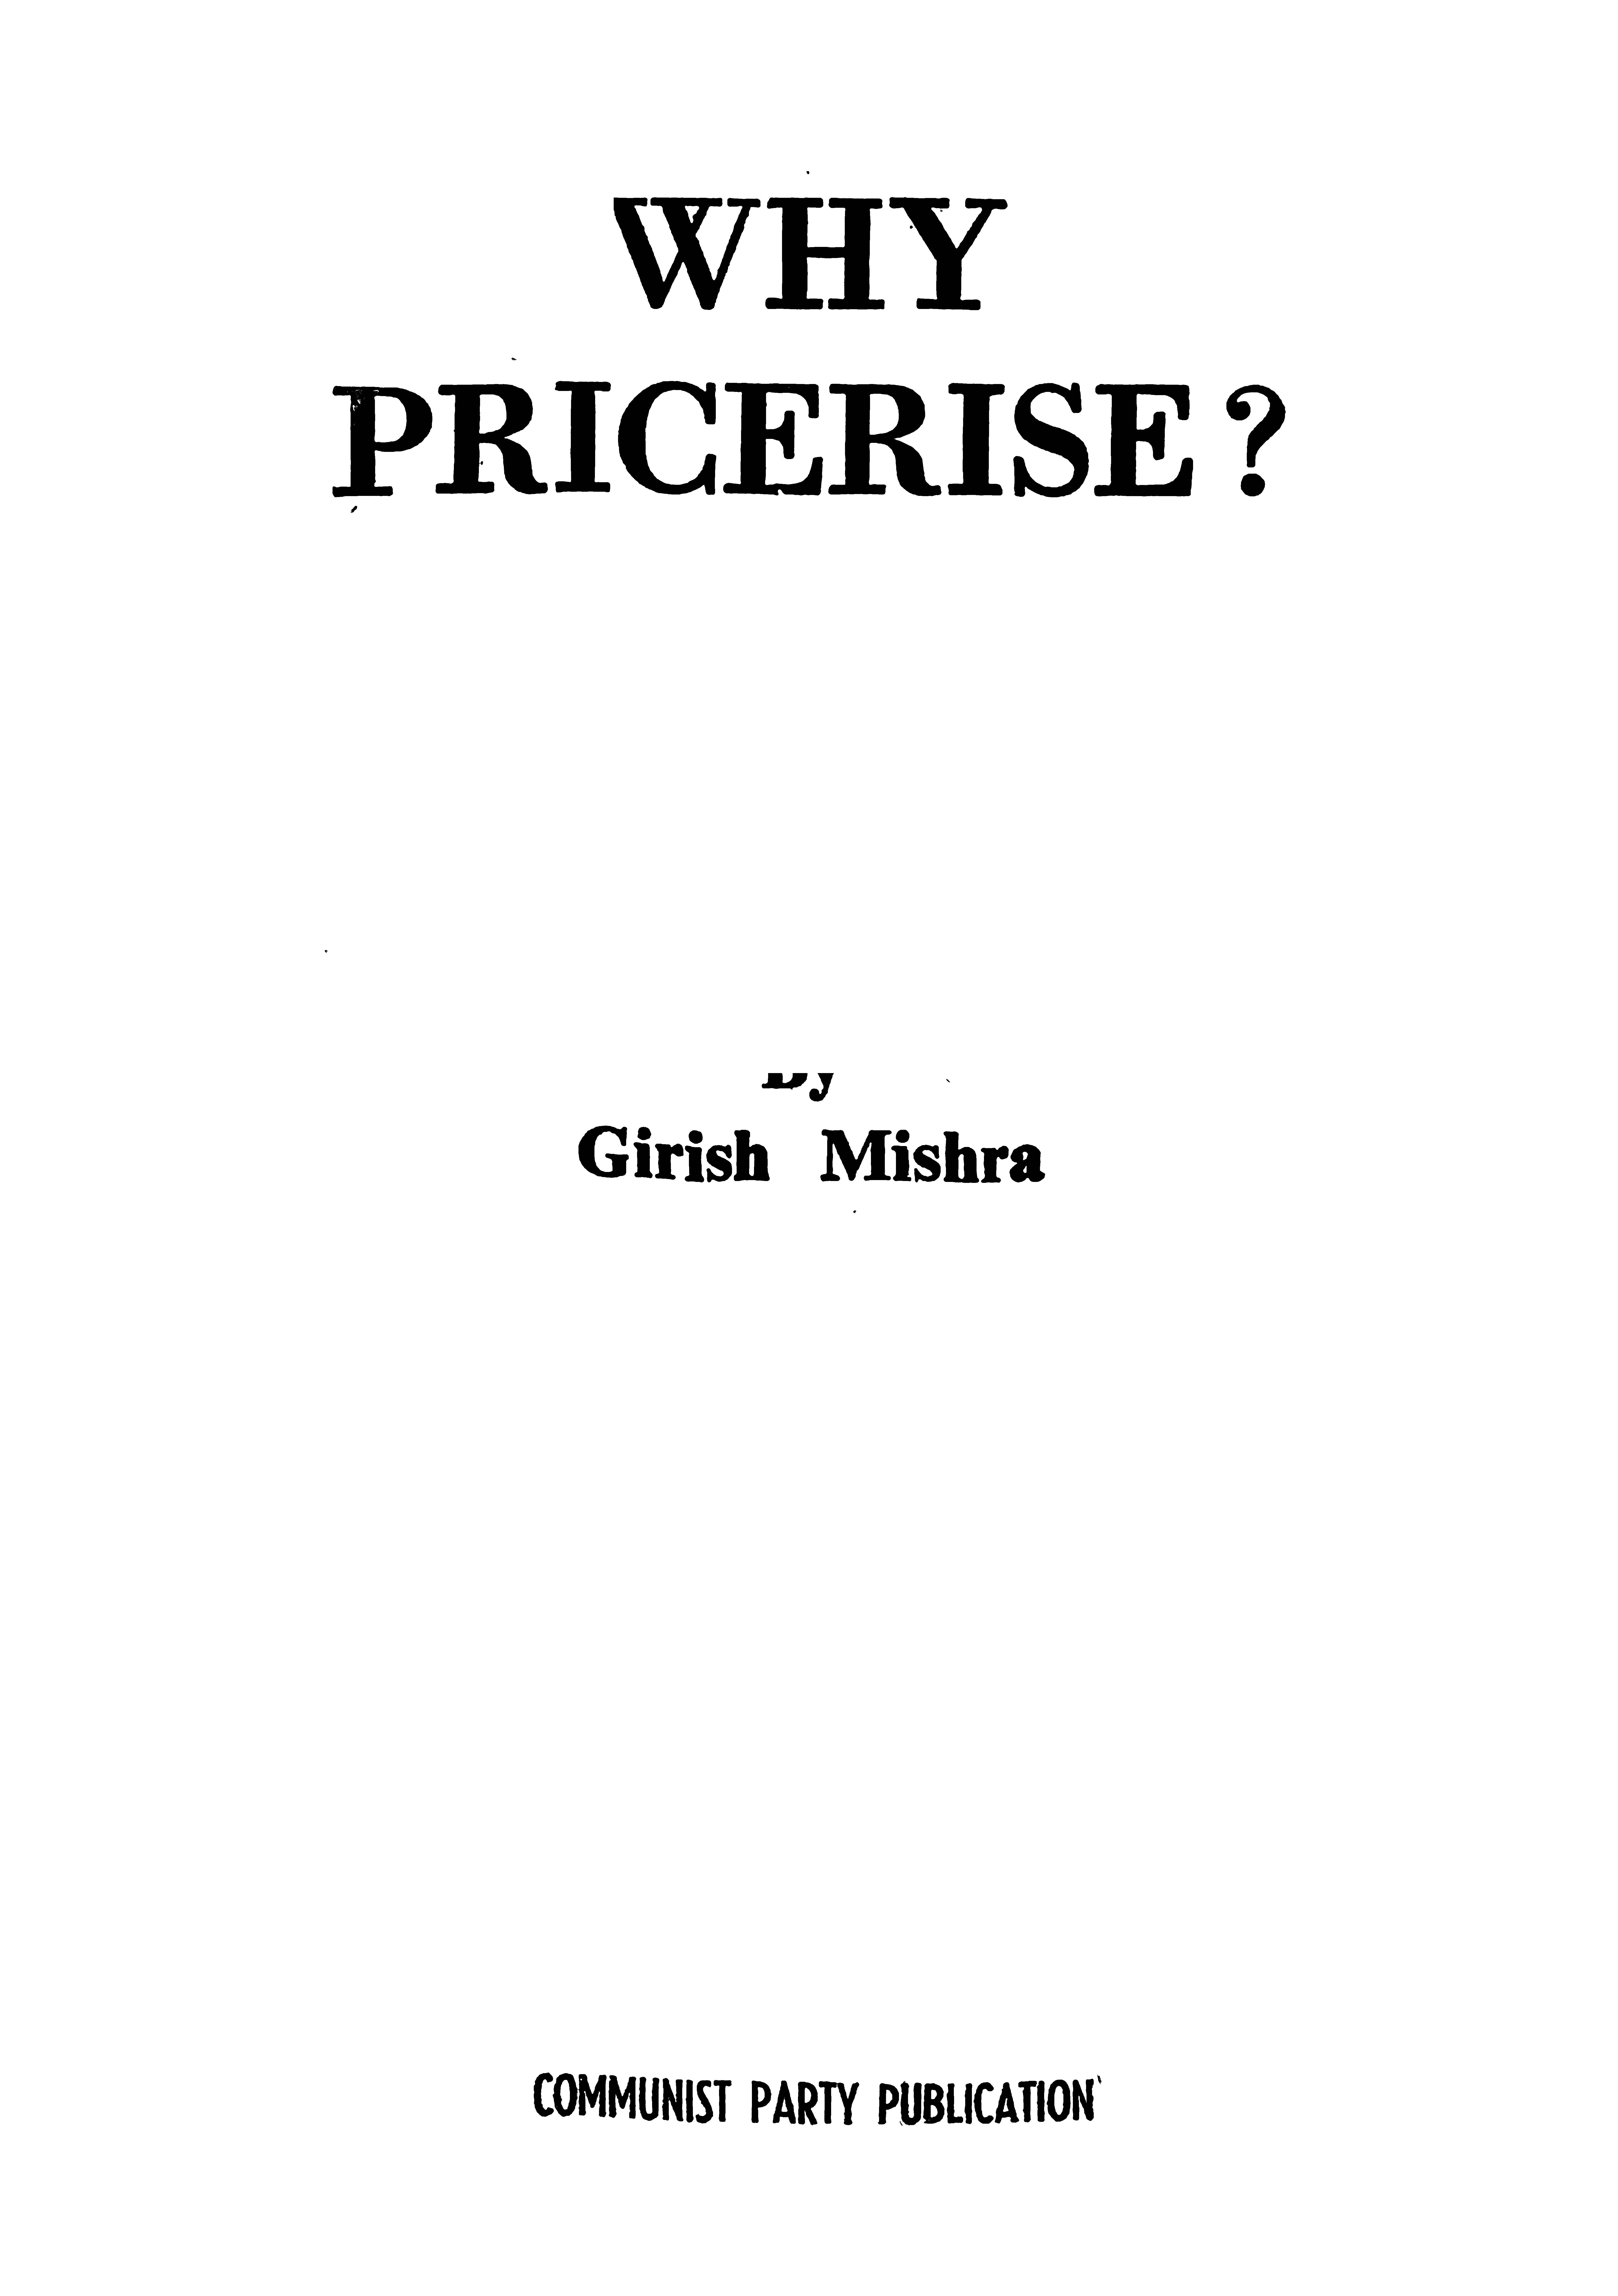 Why pricerise?